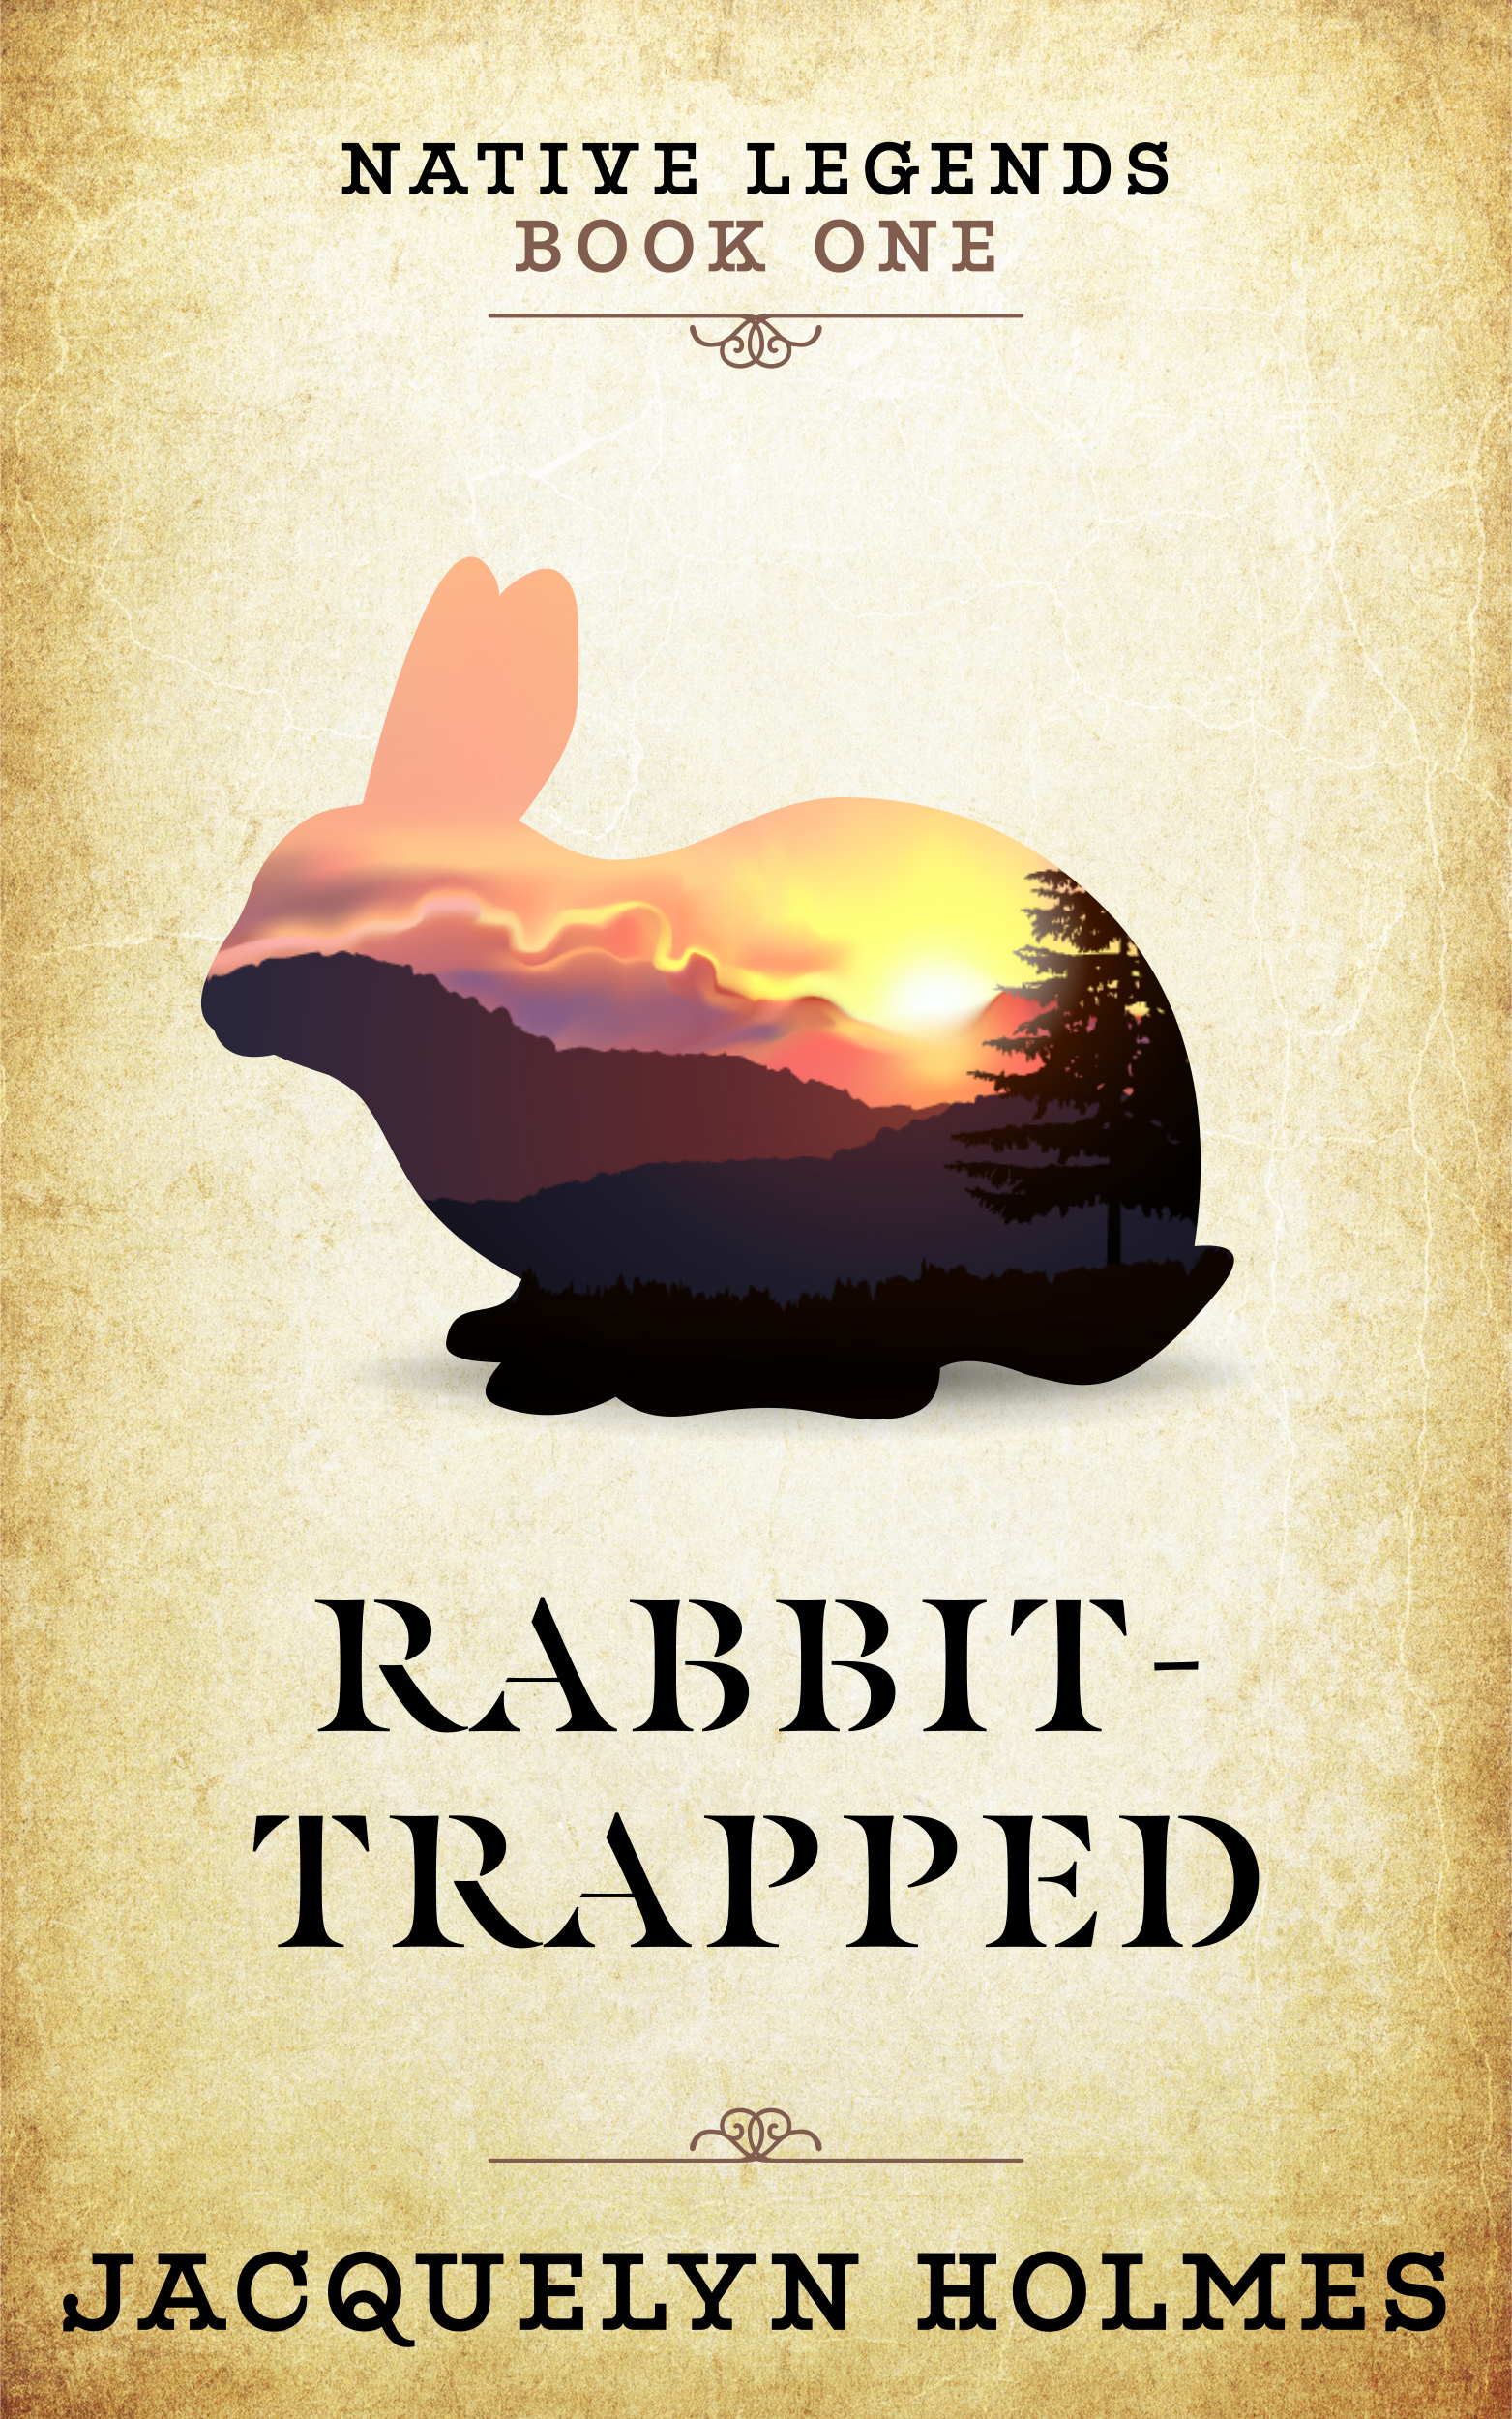 Rabbitt-Trapped book jacket